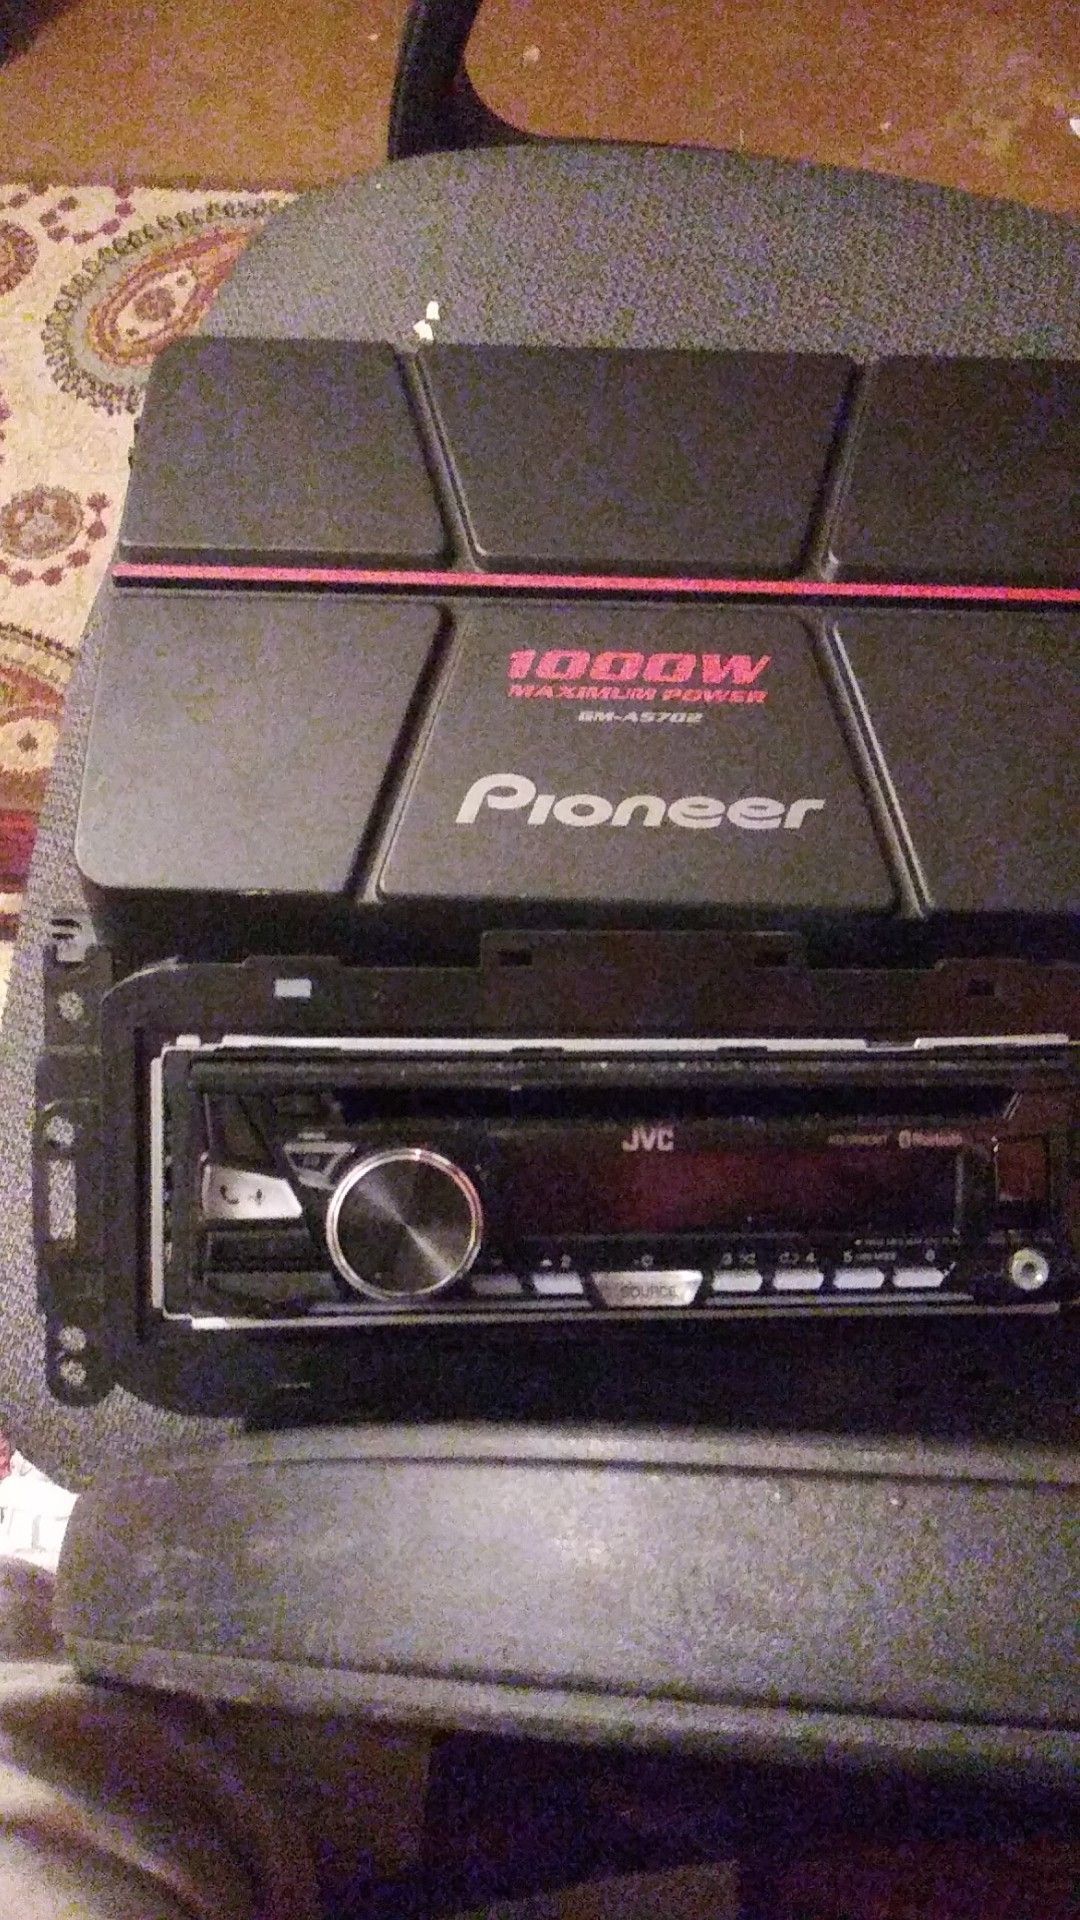 JVC car stereo with PIONEER 1000 watt amp